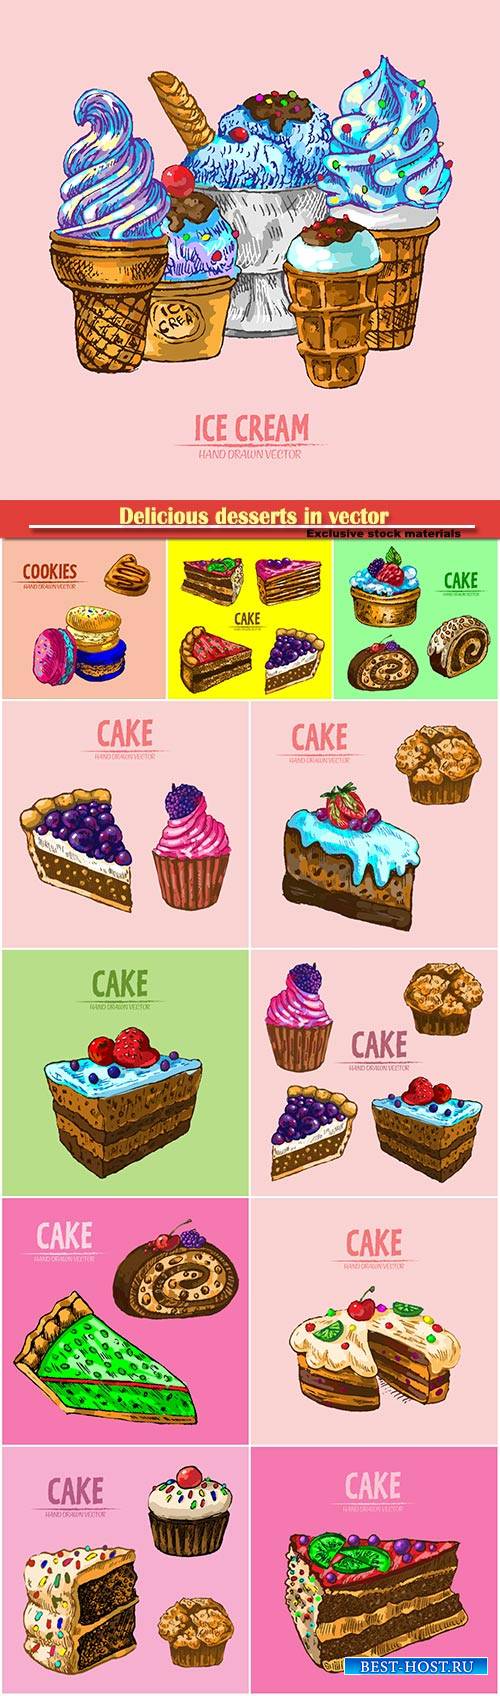 Delicious desserts in vector, cakes and ice cream